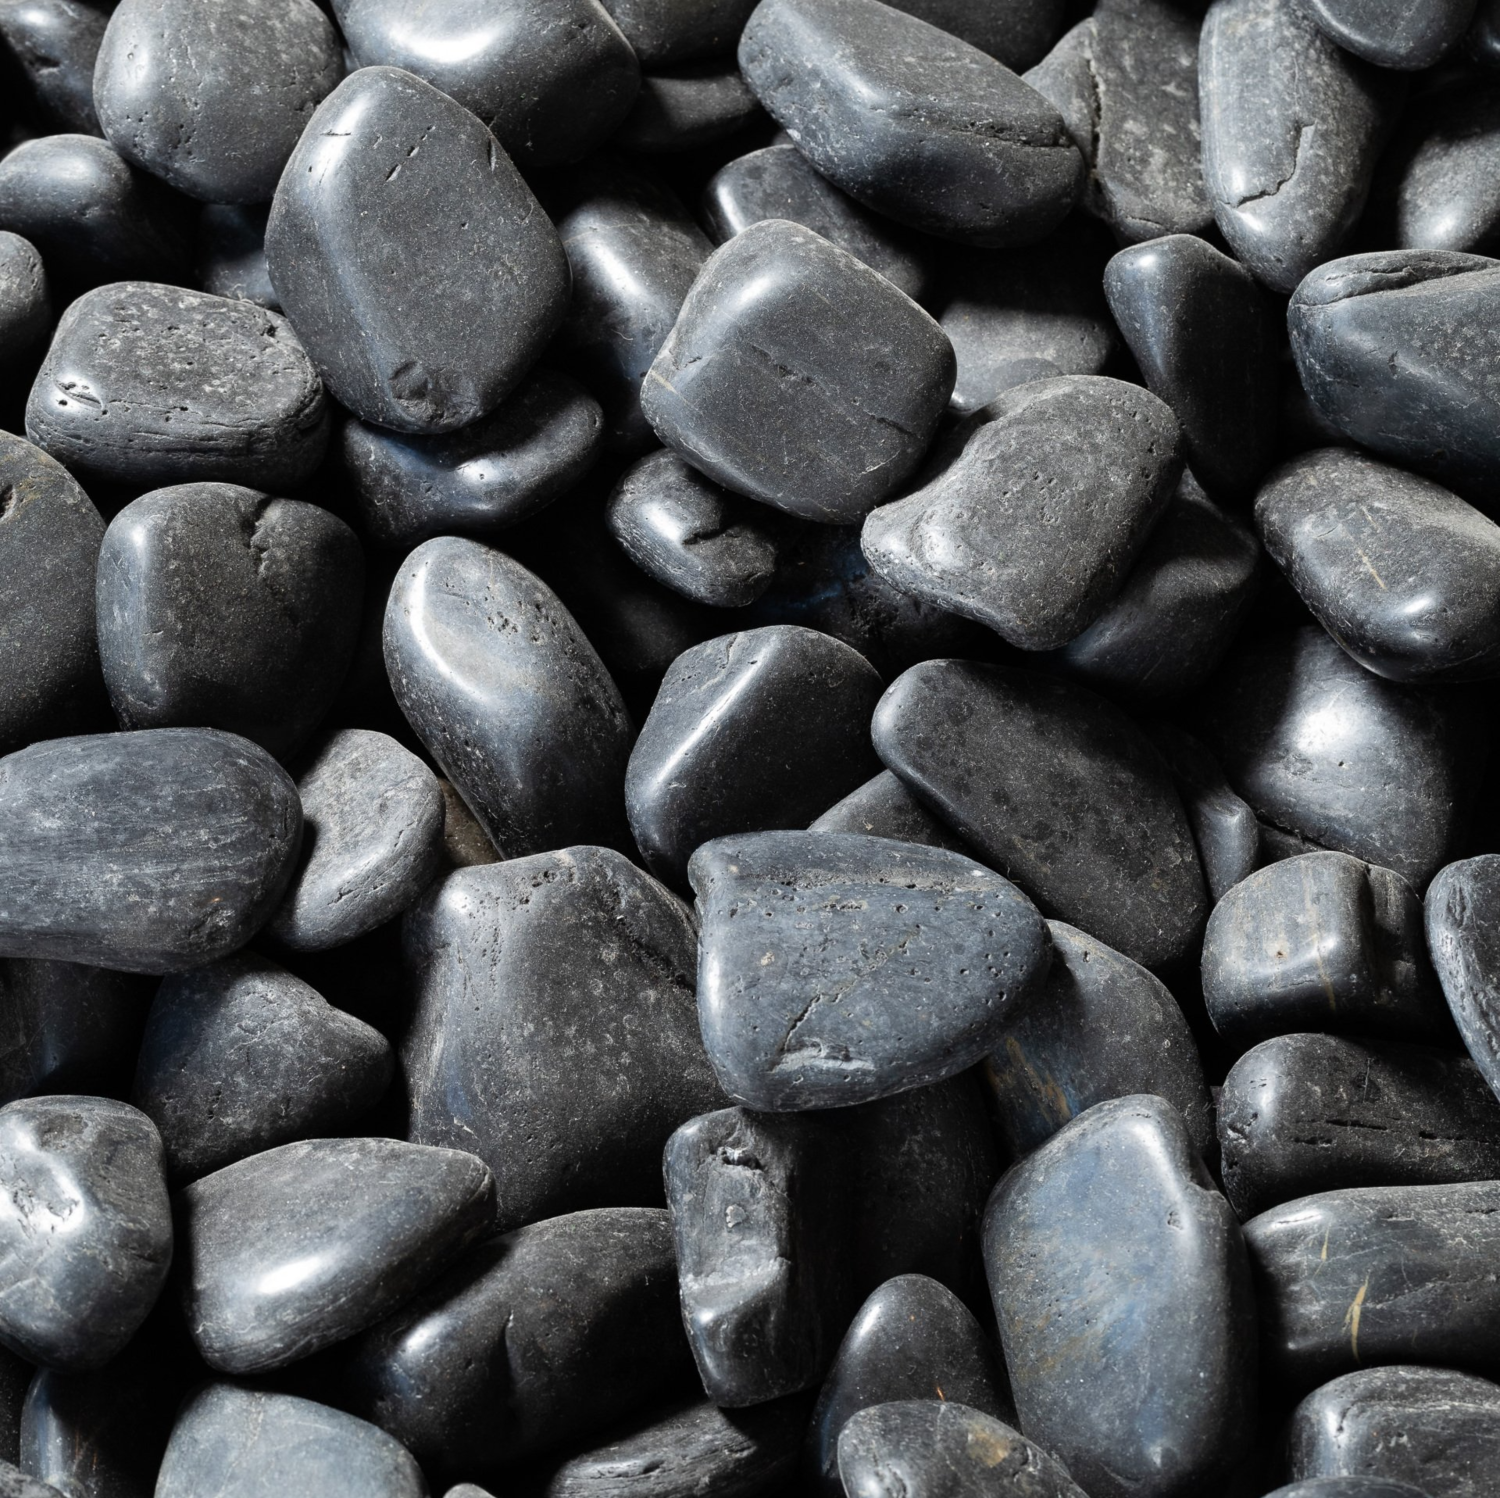 Image of Black pebbles